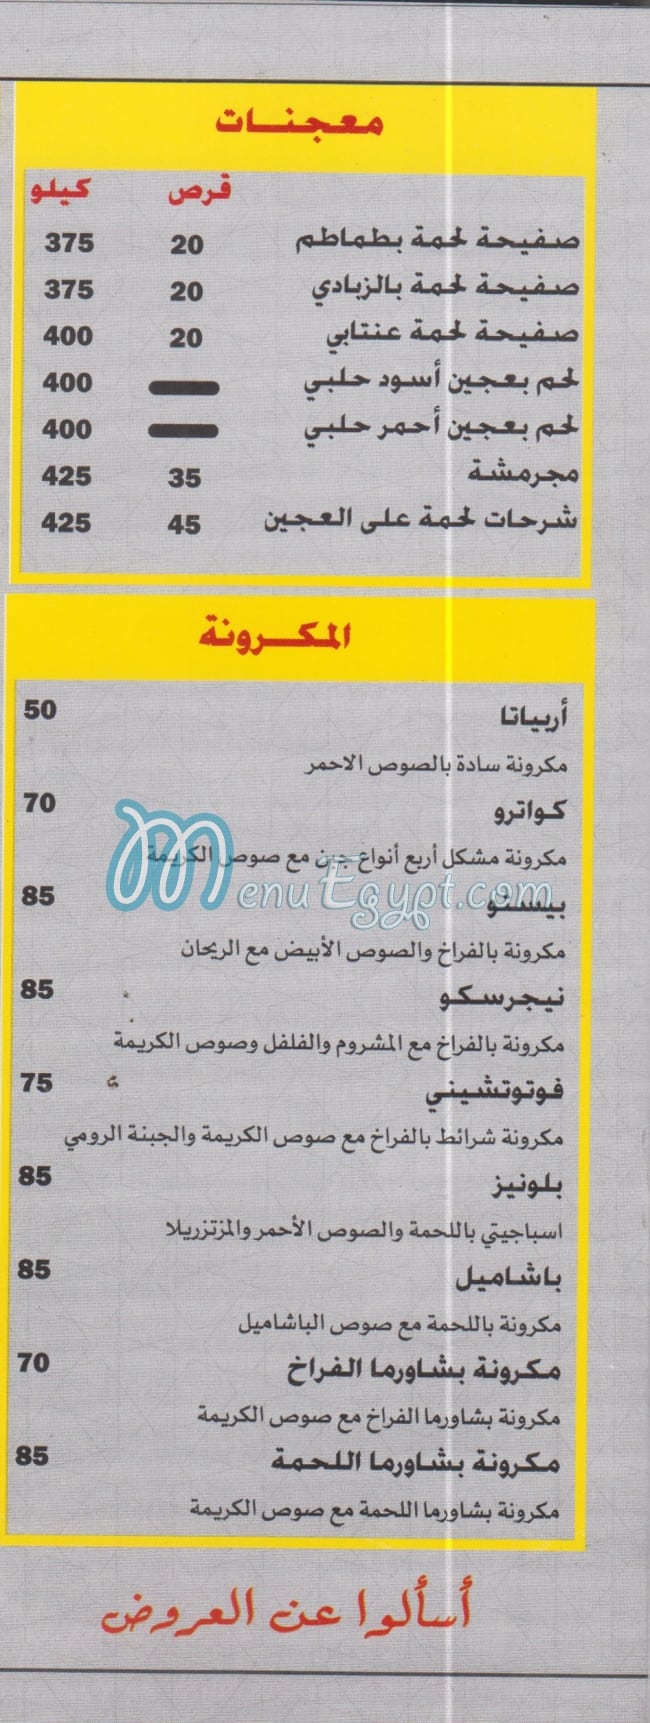 Share3 Demsheq menu Egypt 2